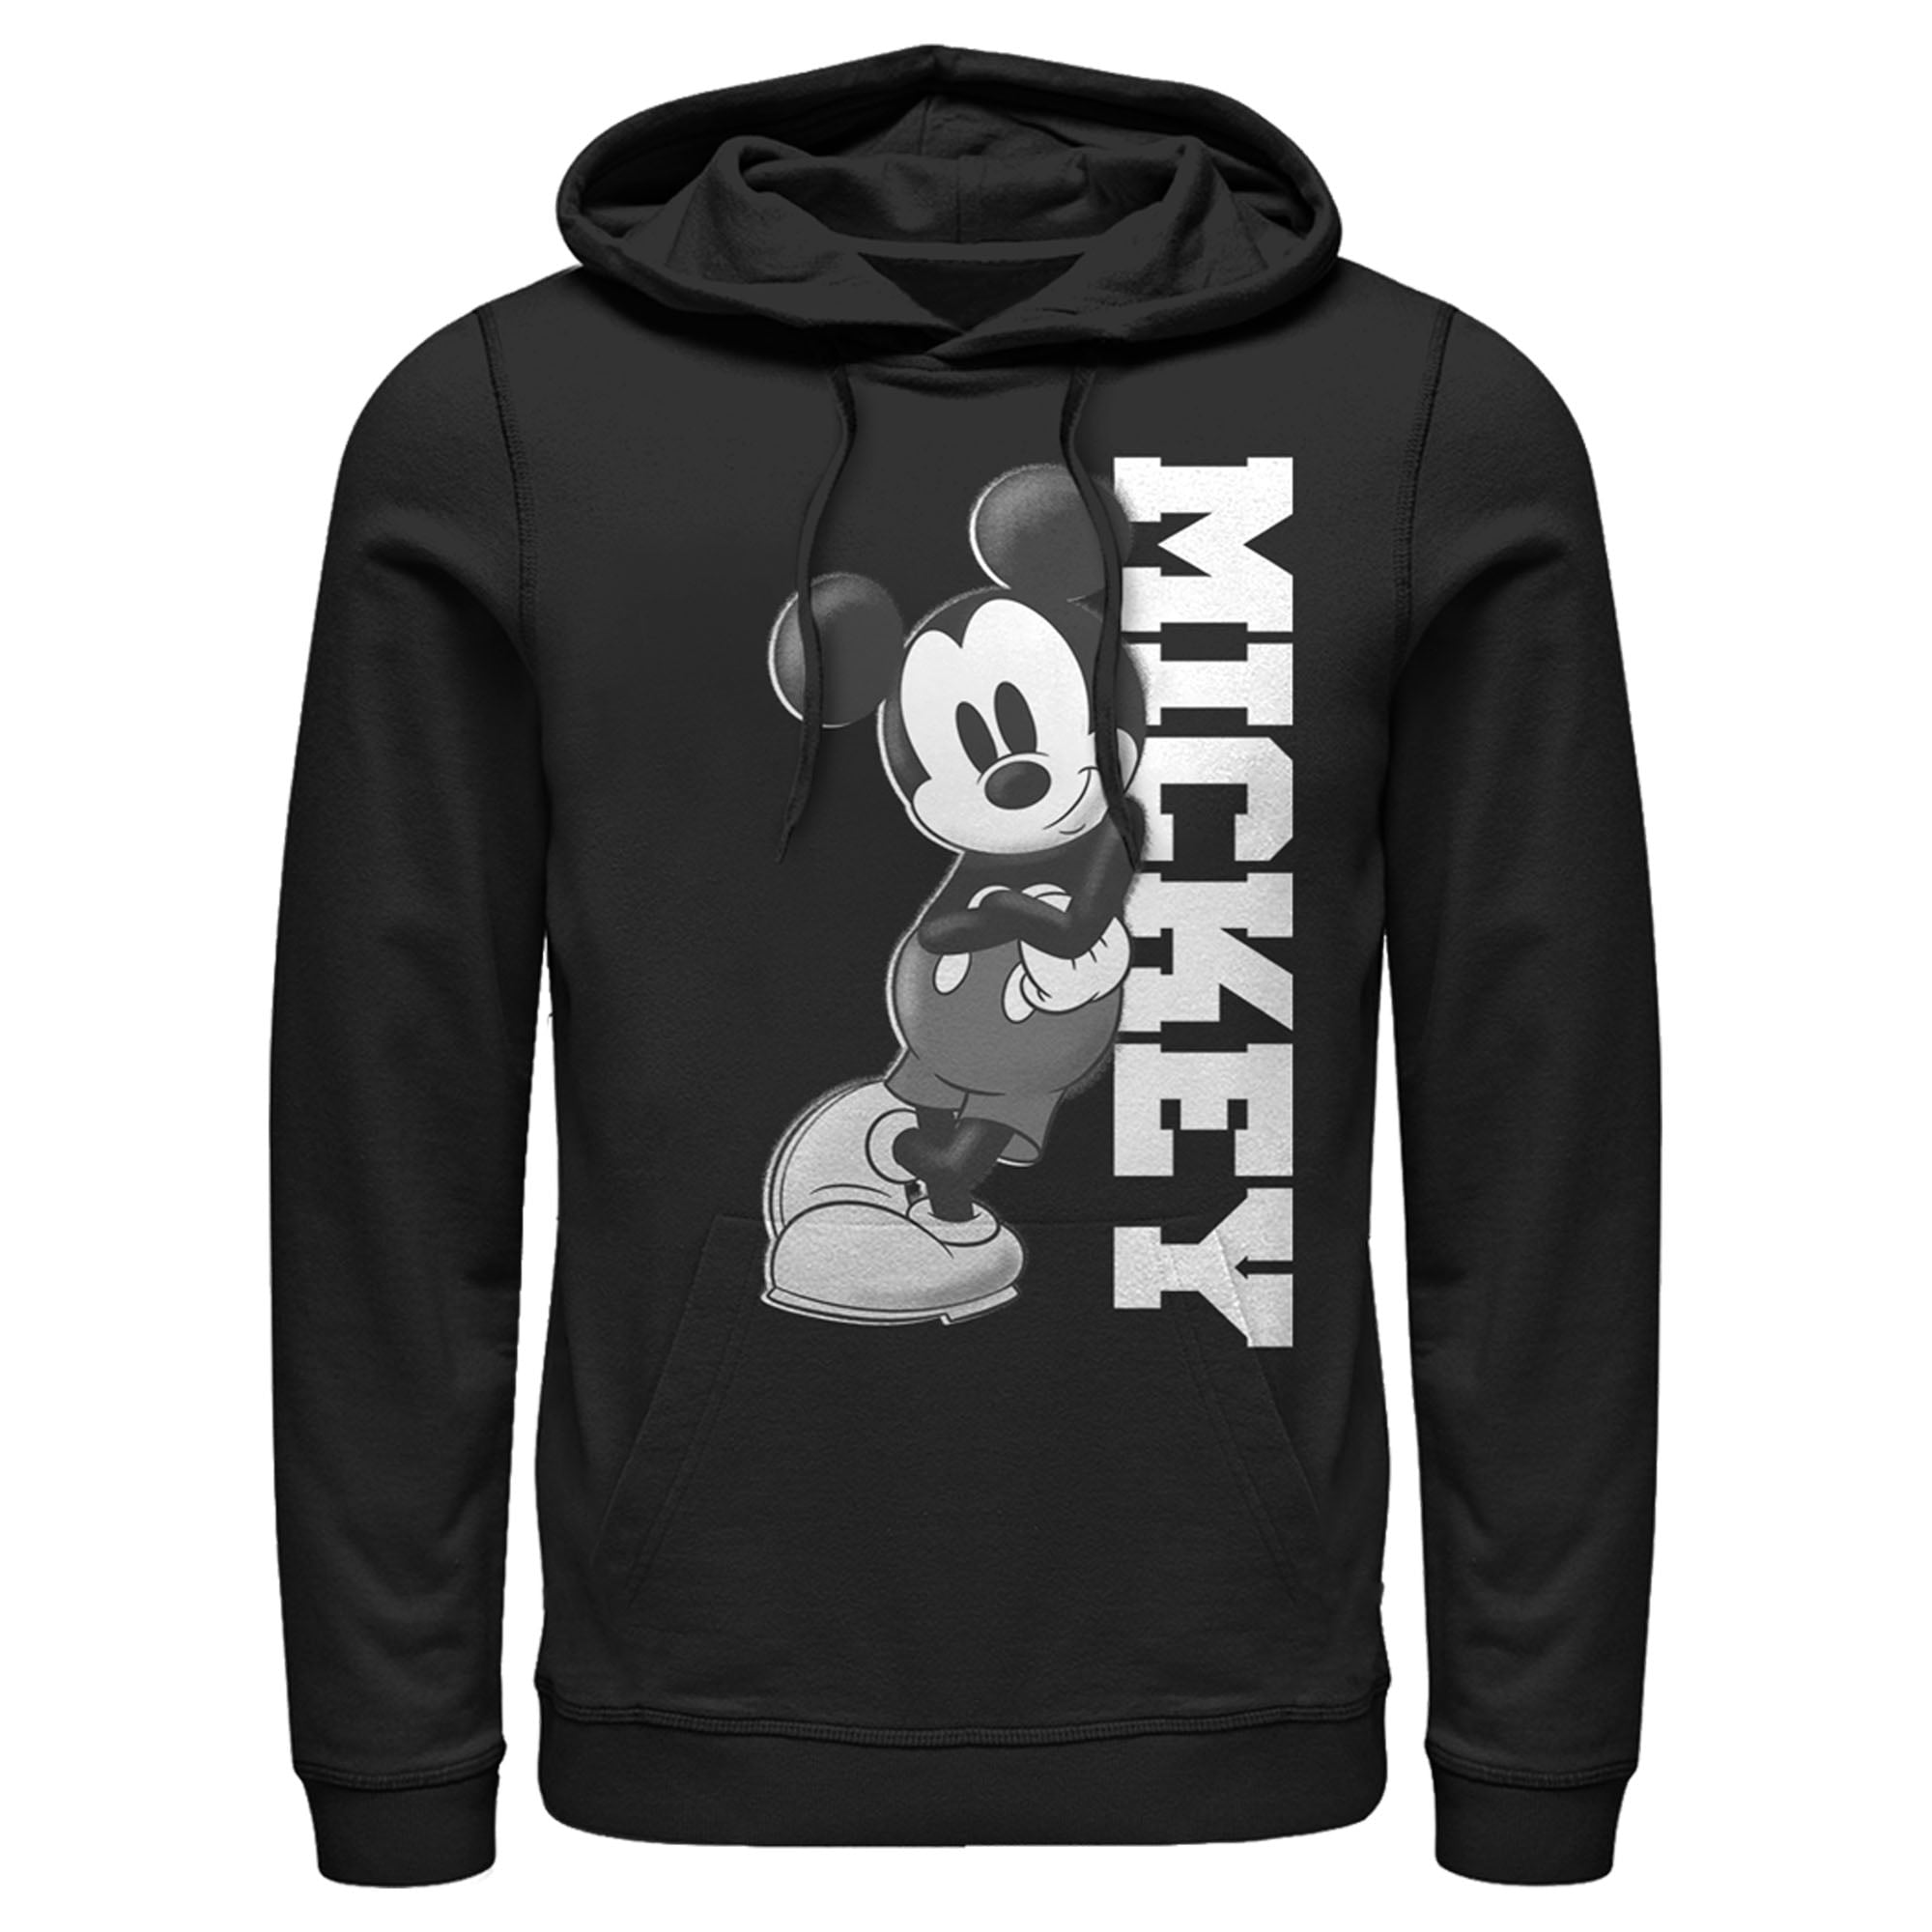 Men's Mickey & Friends Cheetah Print Minnie Mouse Bow Sweatshirt